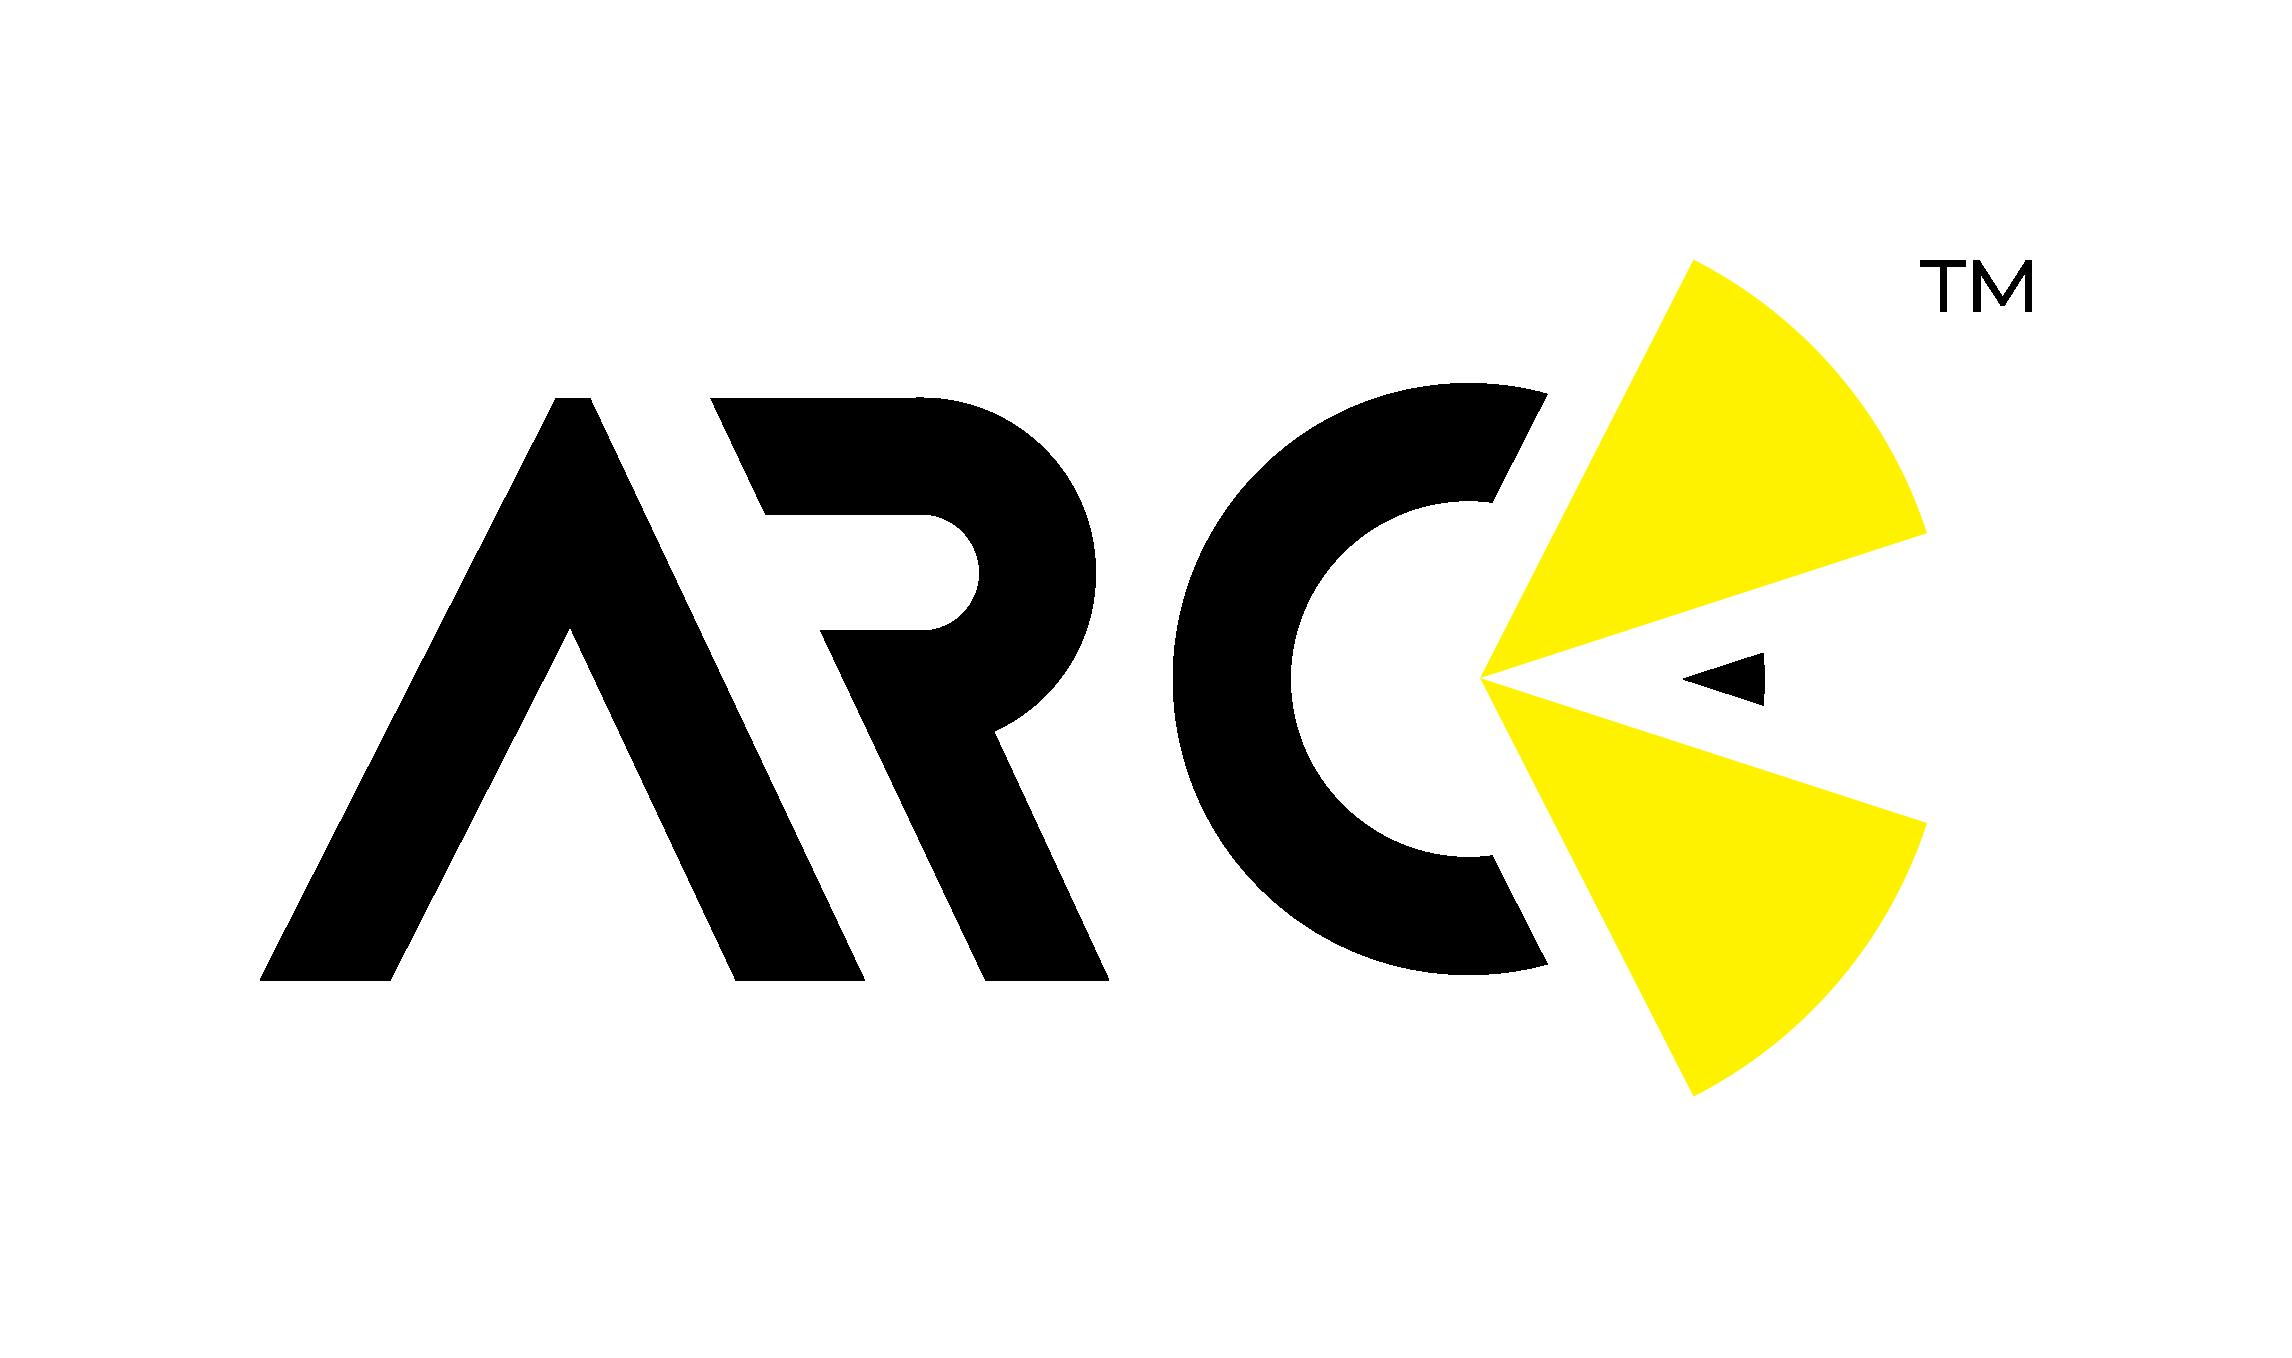 ARC Lighting